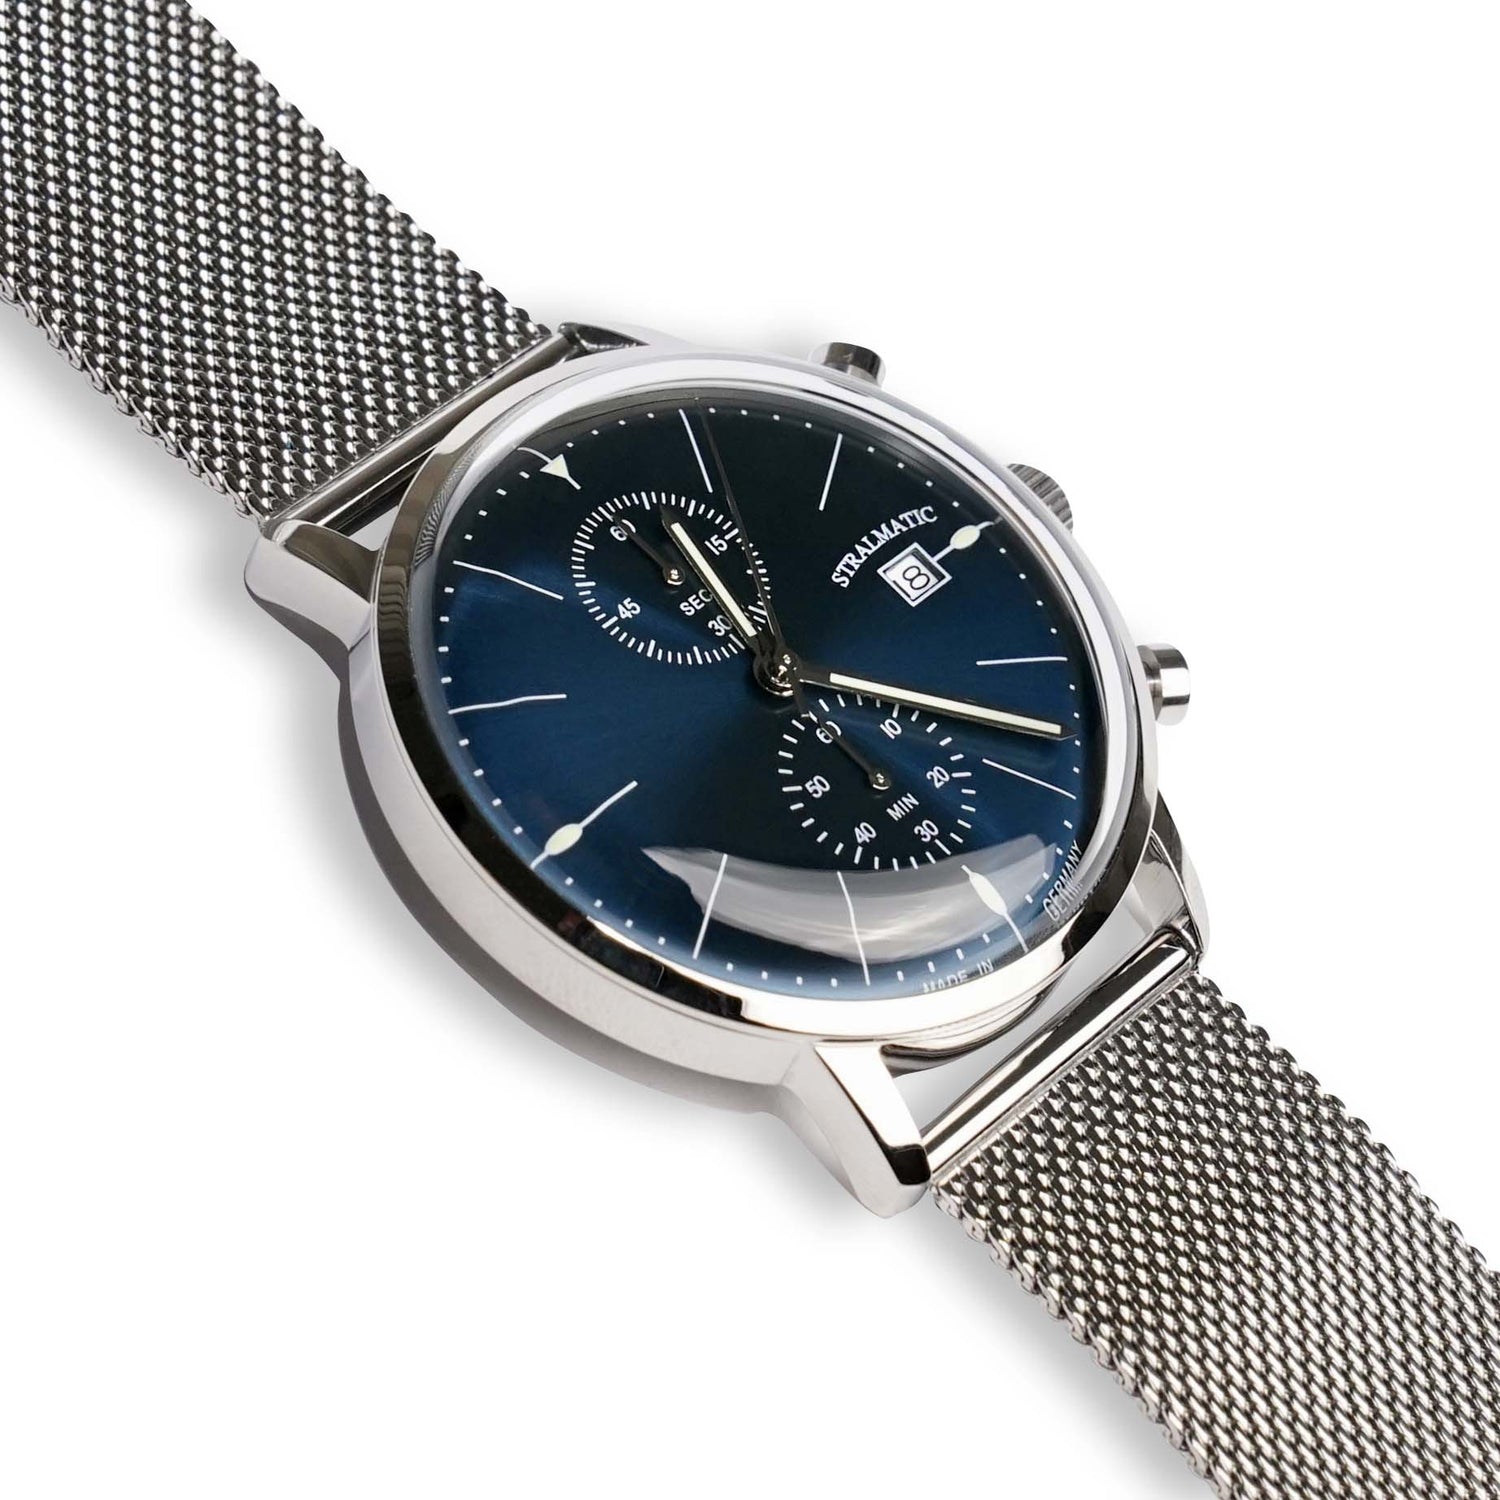 Nordstrand Bauhaus Chronograph blau, Ref. SNB-1303302 – STRALMATIC-Uhren